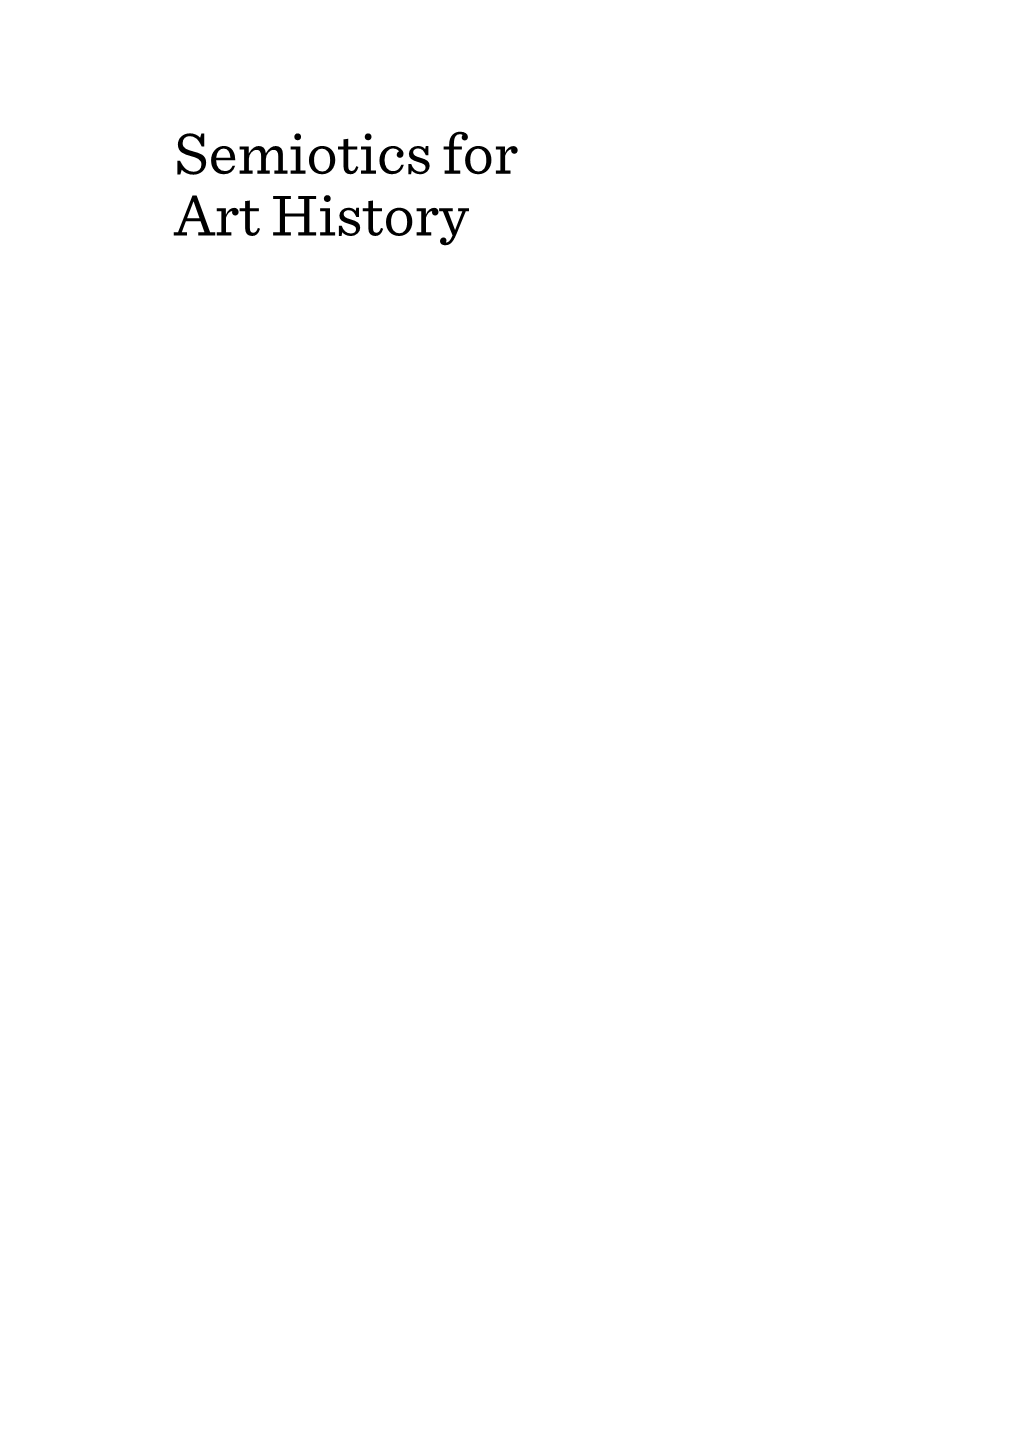 Semiotics for Art History